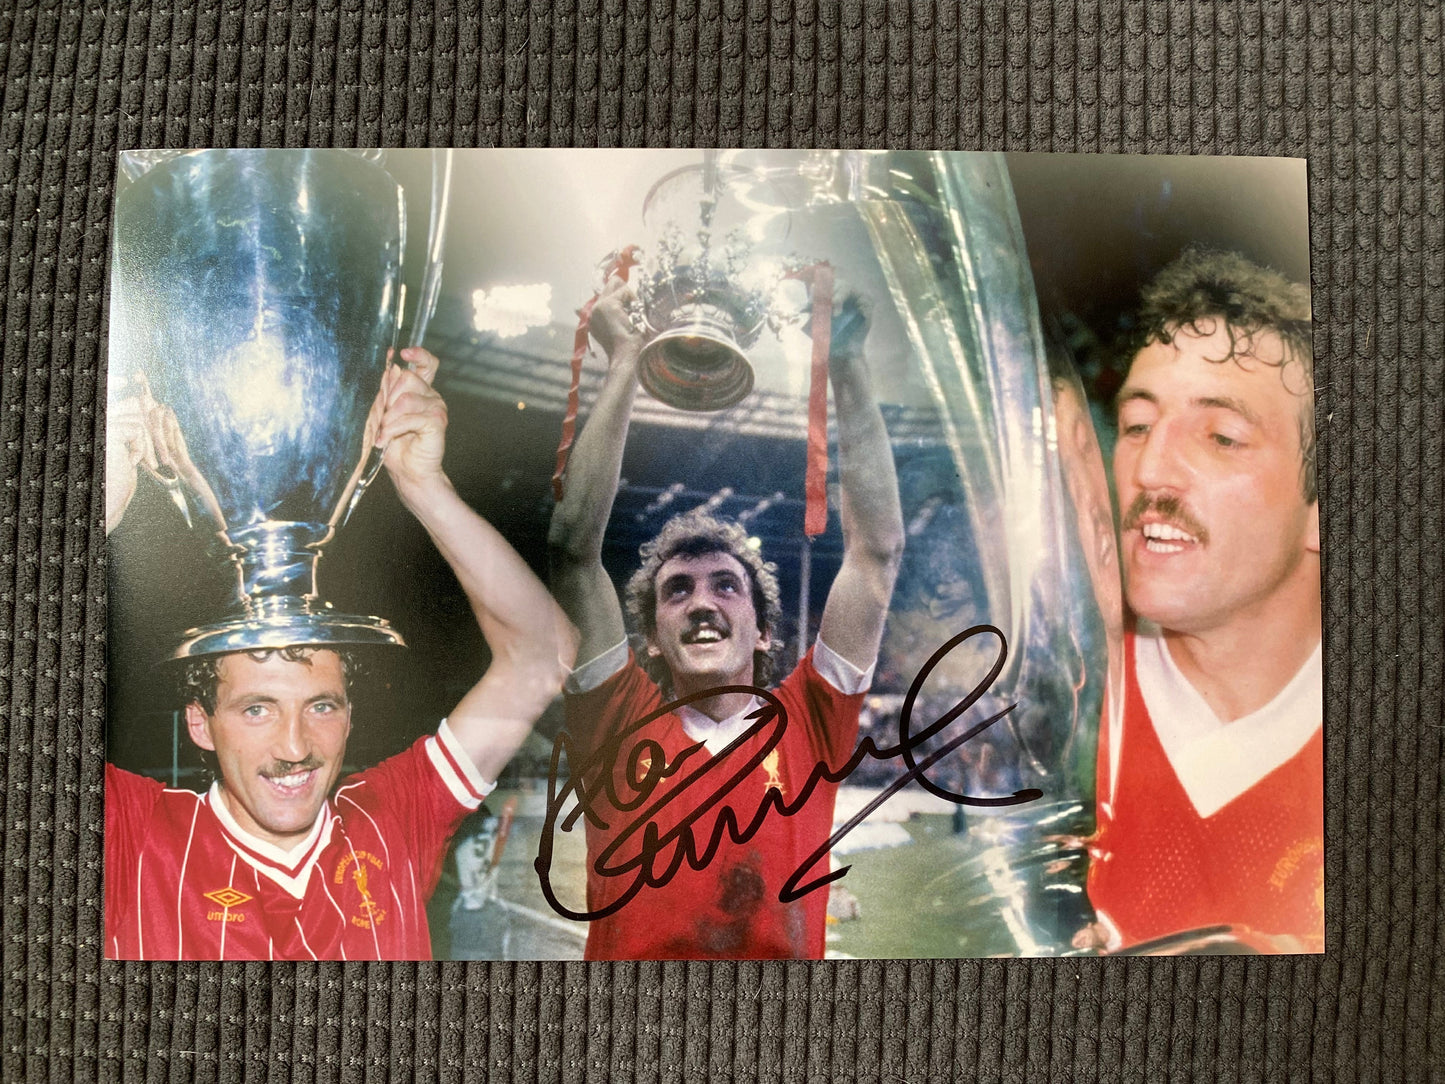 Alan Kennedy - Liverpool FC - A4 signed photo - LFC memorabilia, gift, autograph